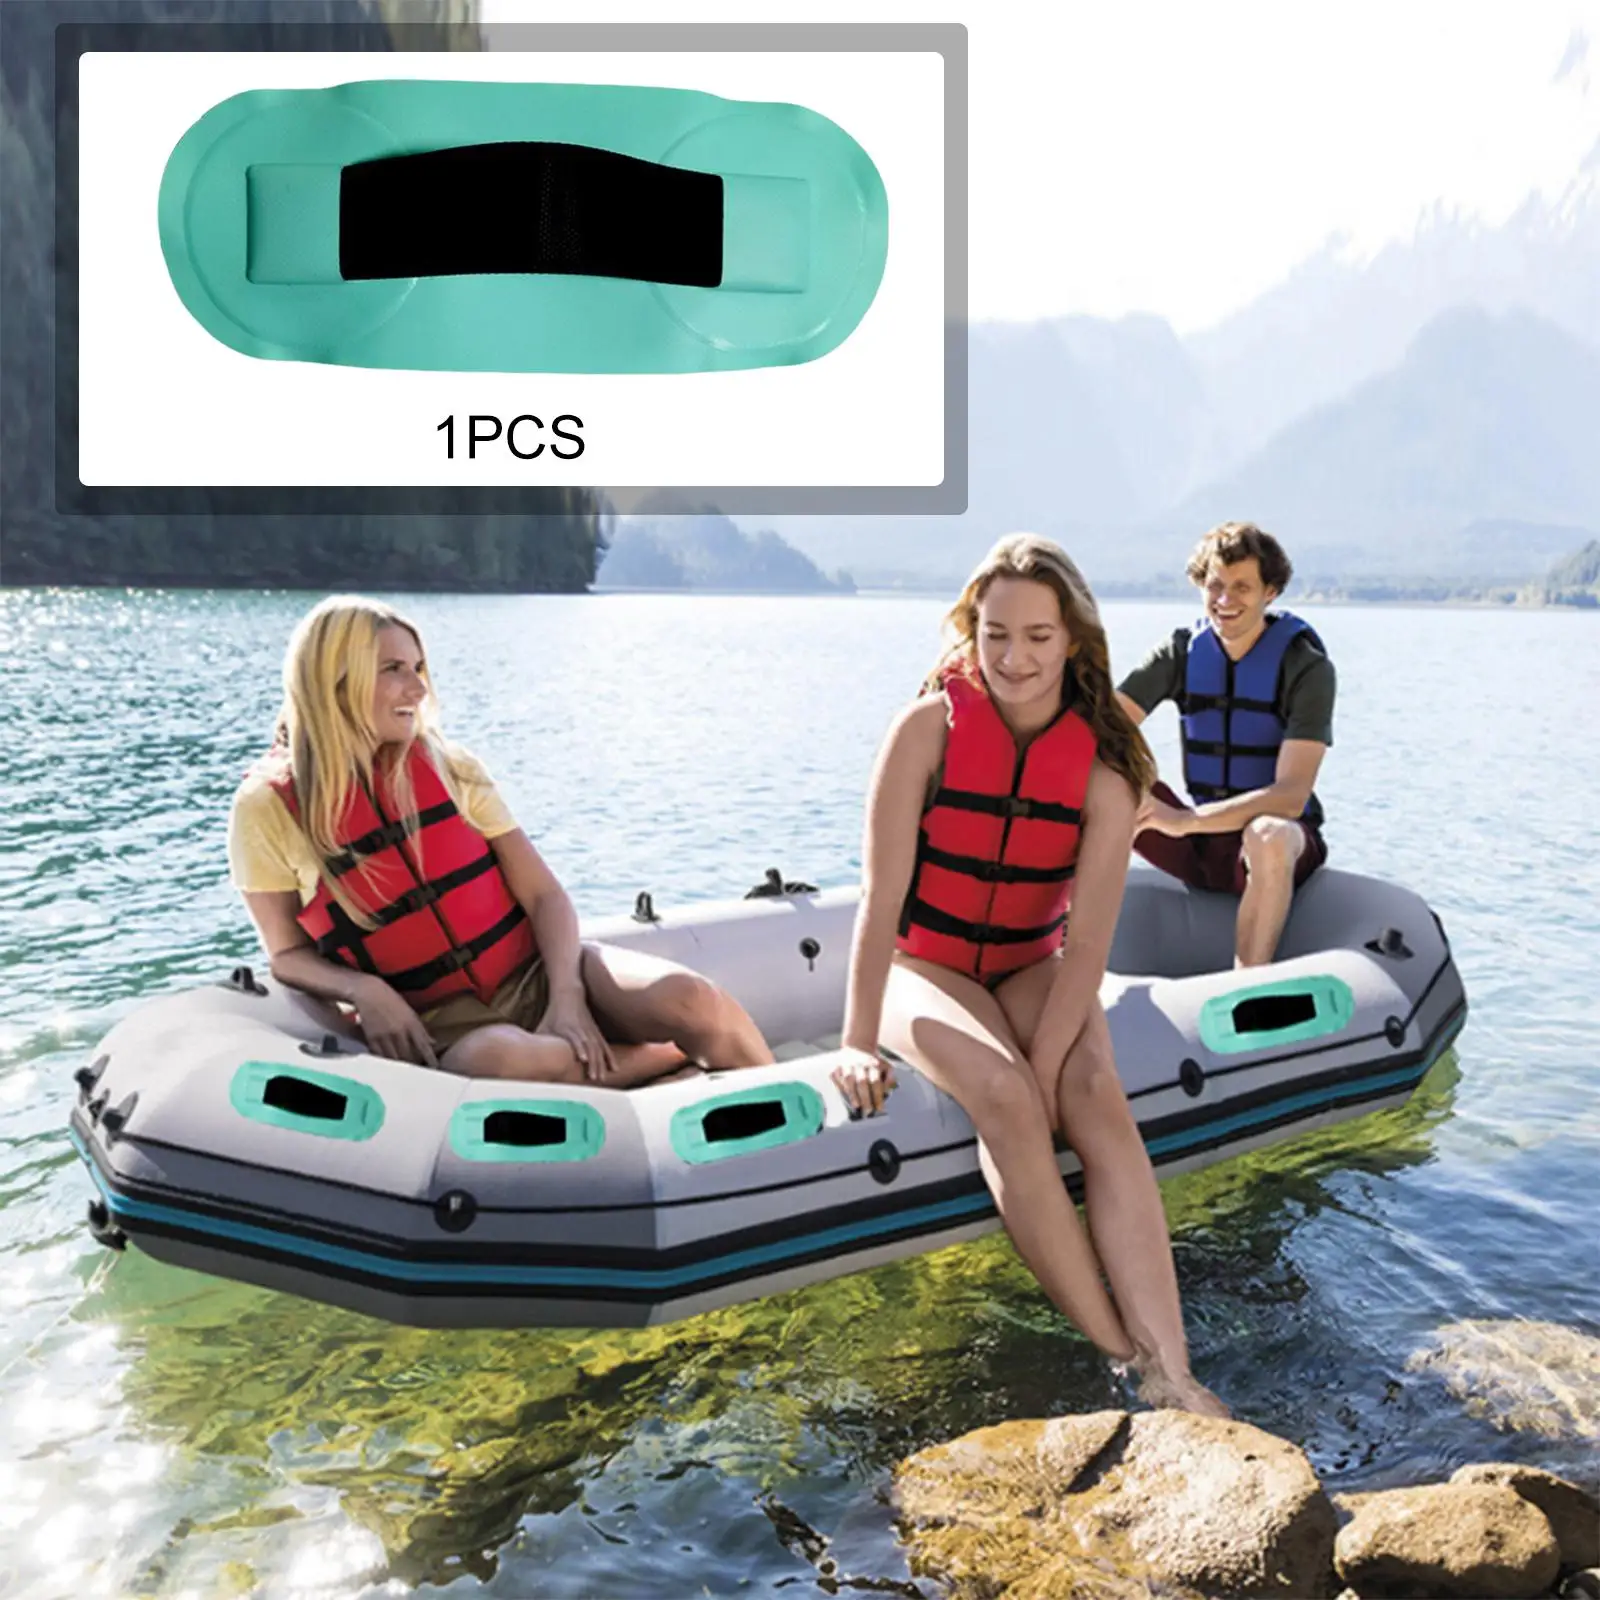 Kayak Carry  Inflatable Boats Carrying  kayak boat  PVC Strap   for Boat, Surf, Dinghy, Canoe, Armrest